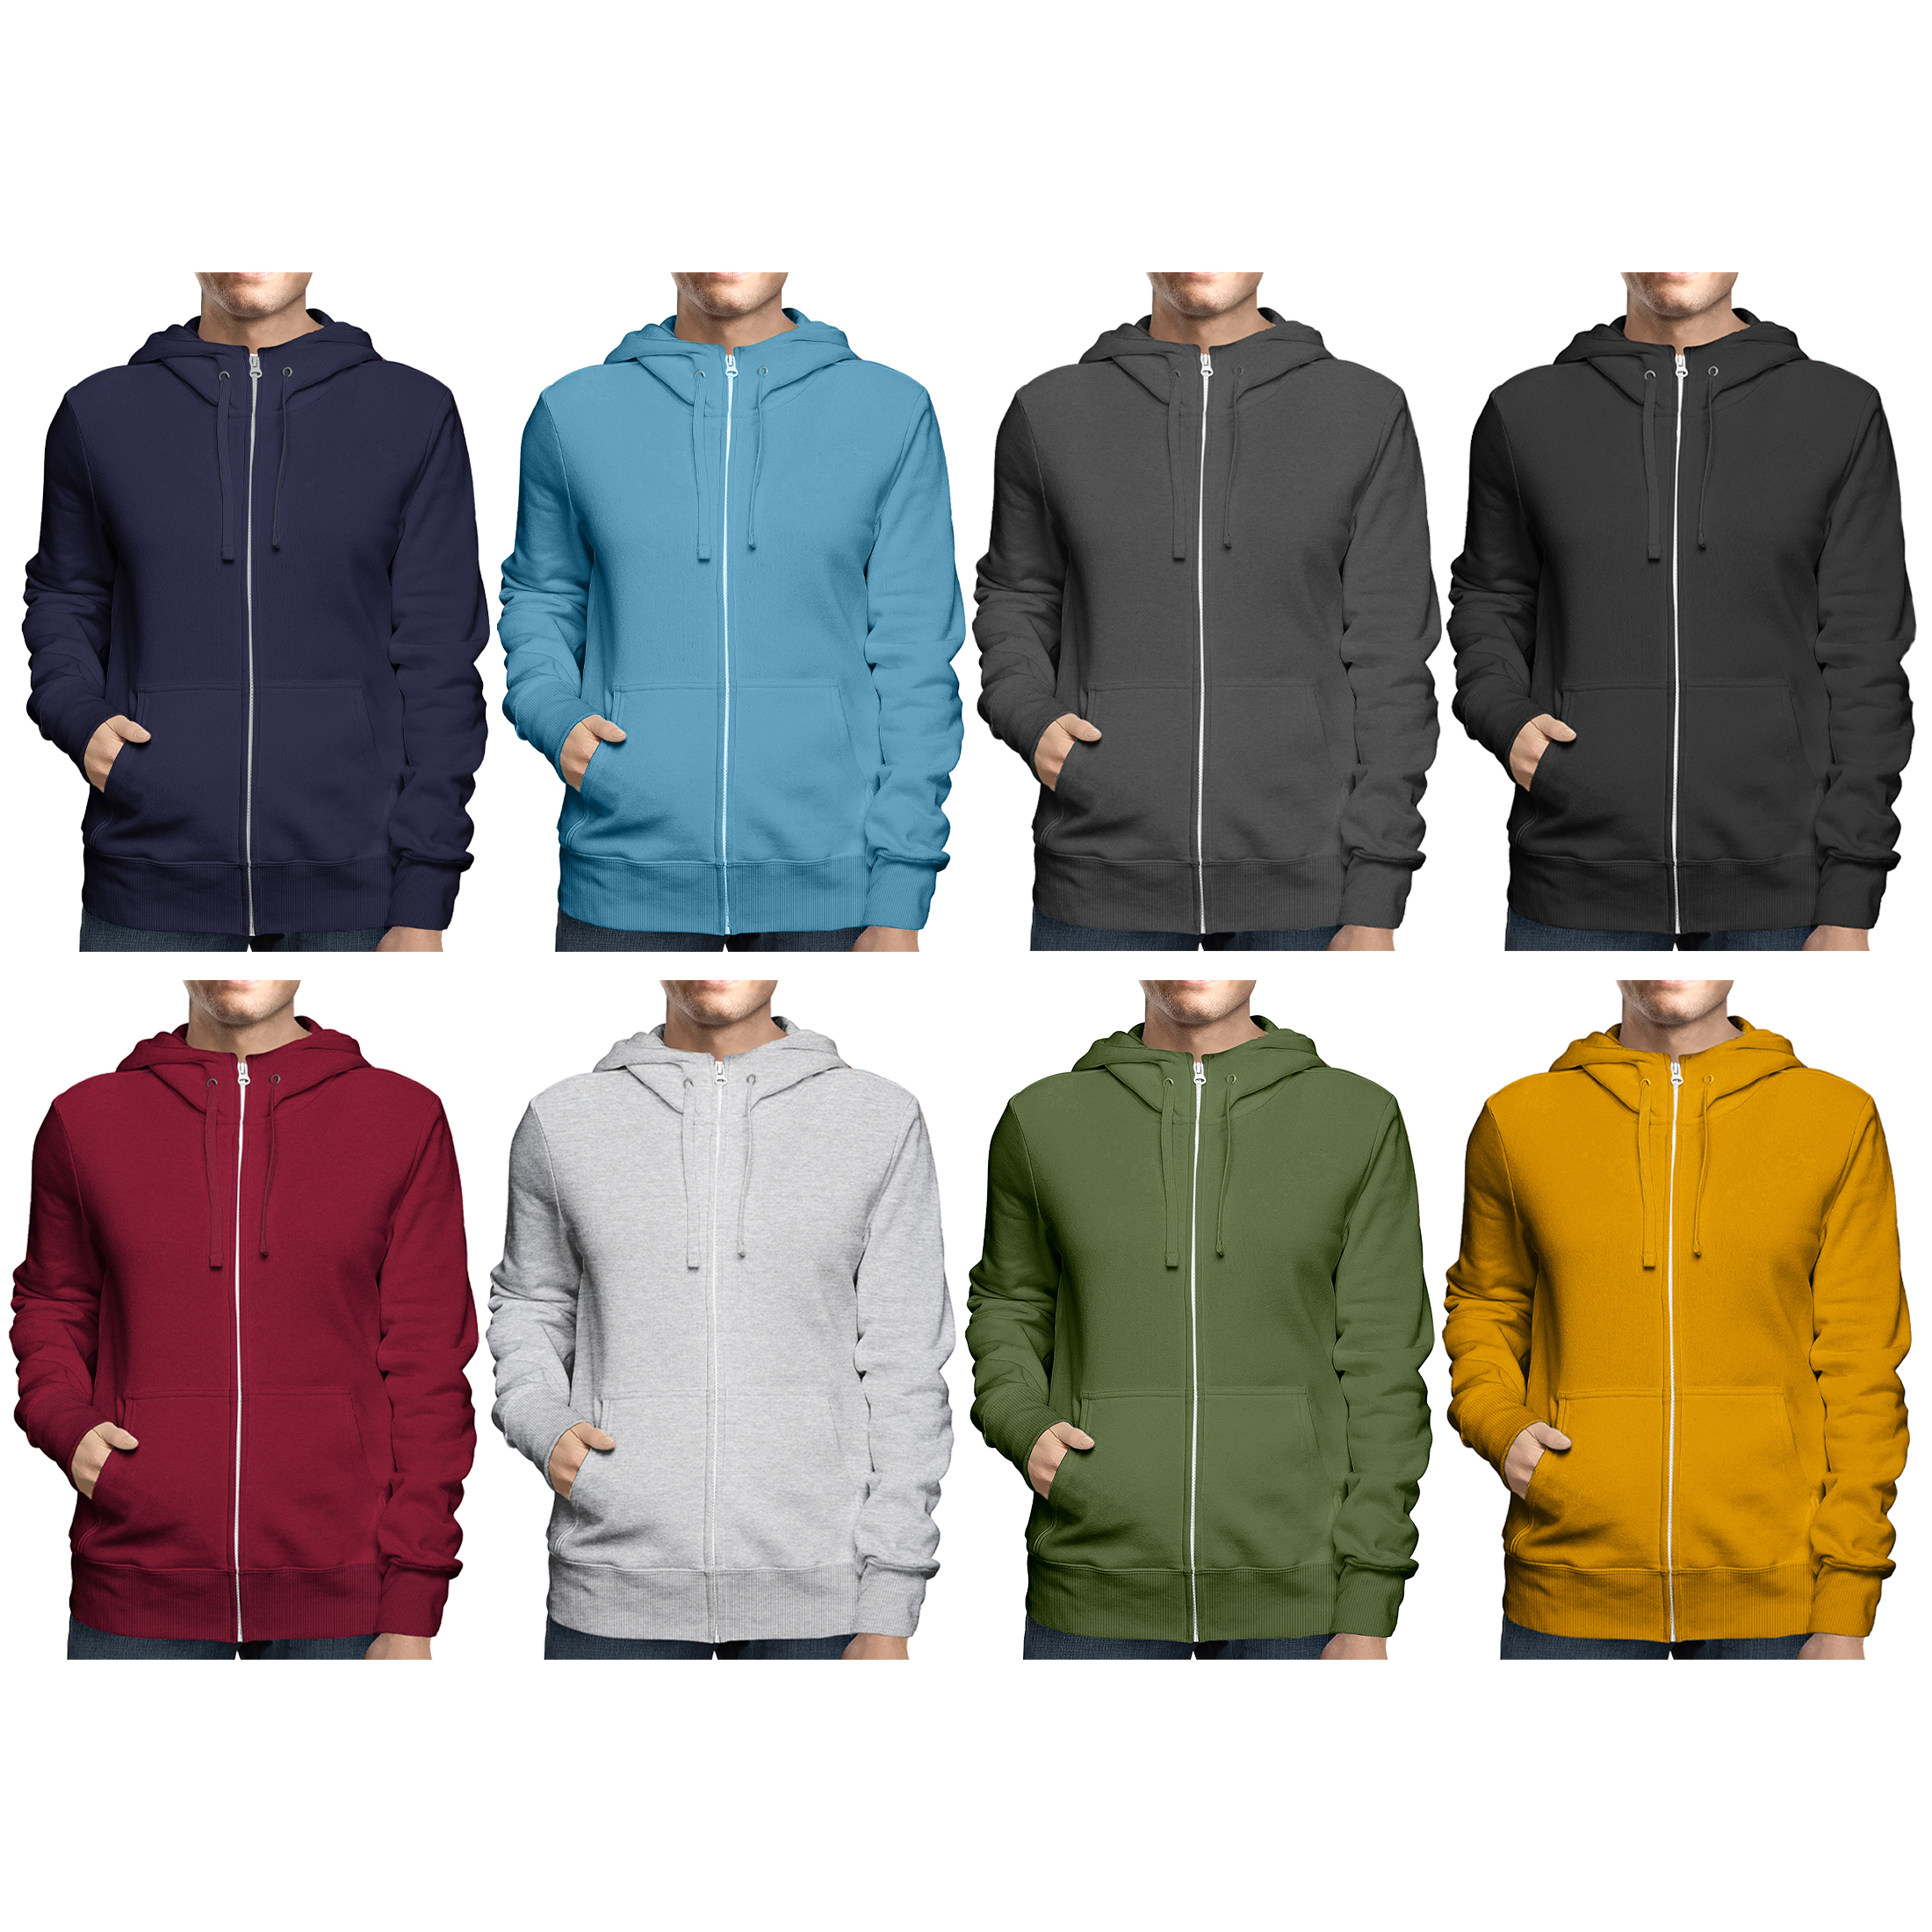 2-Pack: Men's Full Zip Up Fleece-Lined Hoodie Sweatshirt (Big & Tall Size Available) - Navy & Black, Large